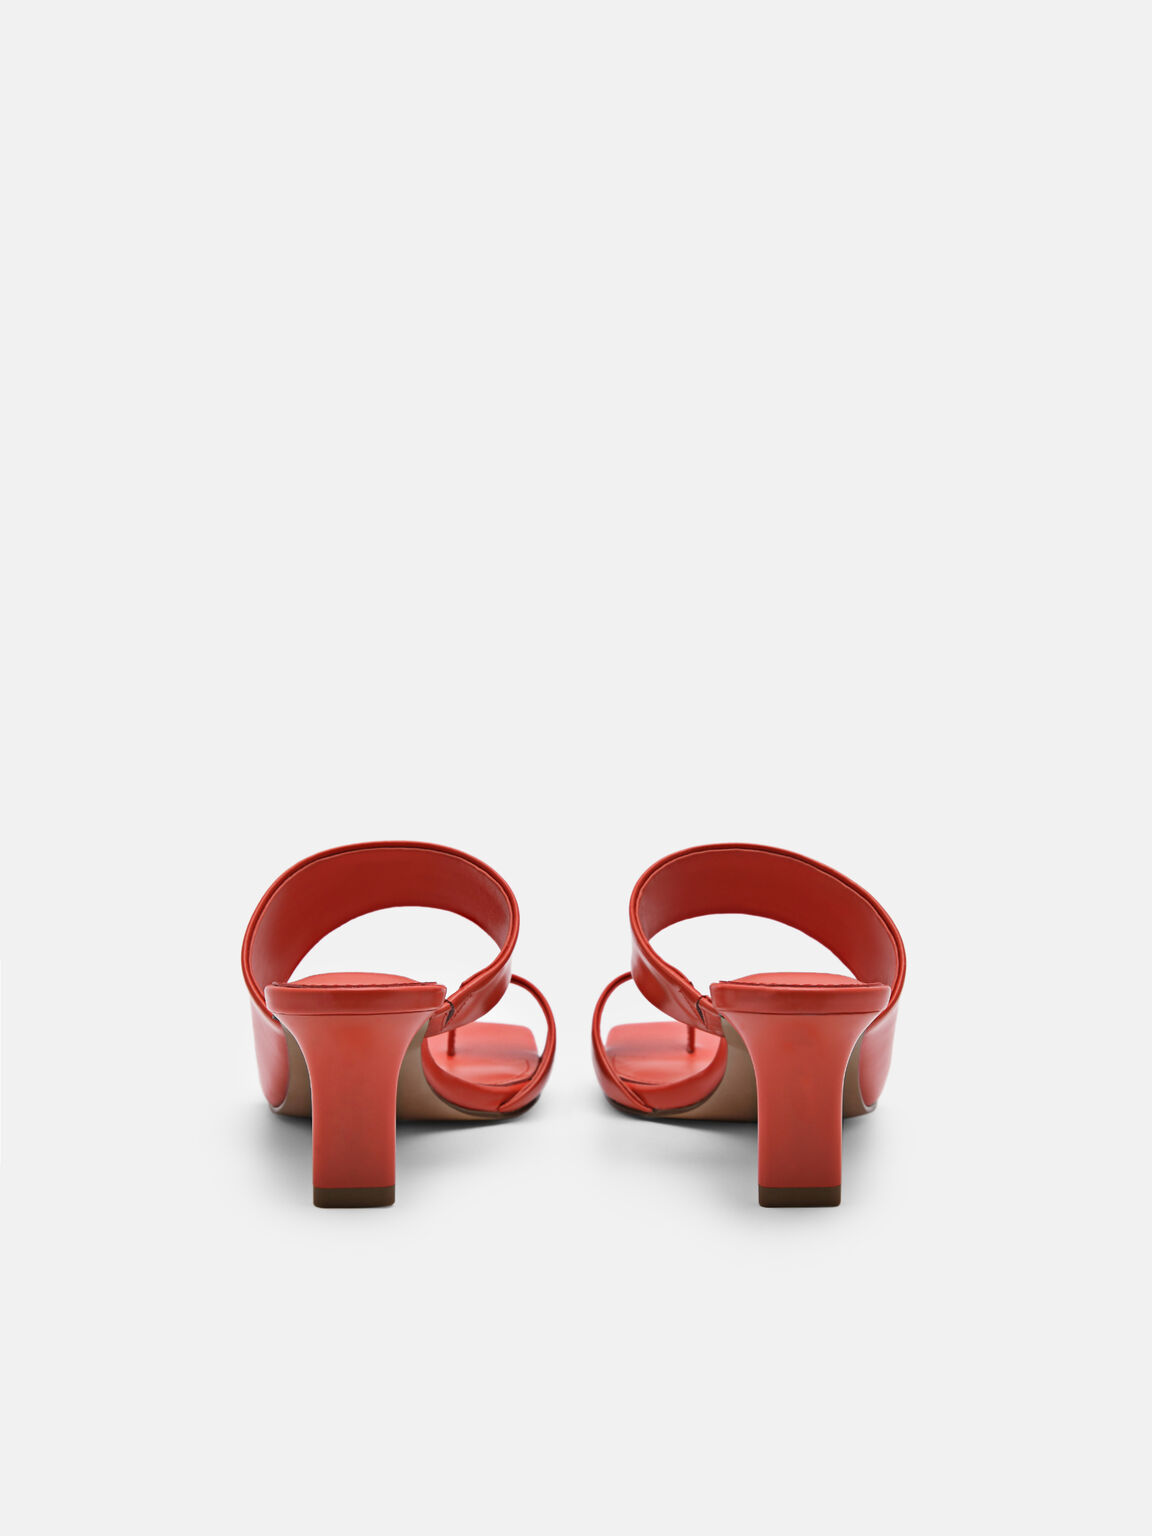 Rocco Leather Heel Sandals, Red, hi-res